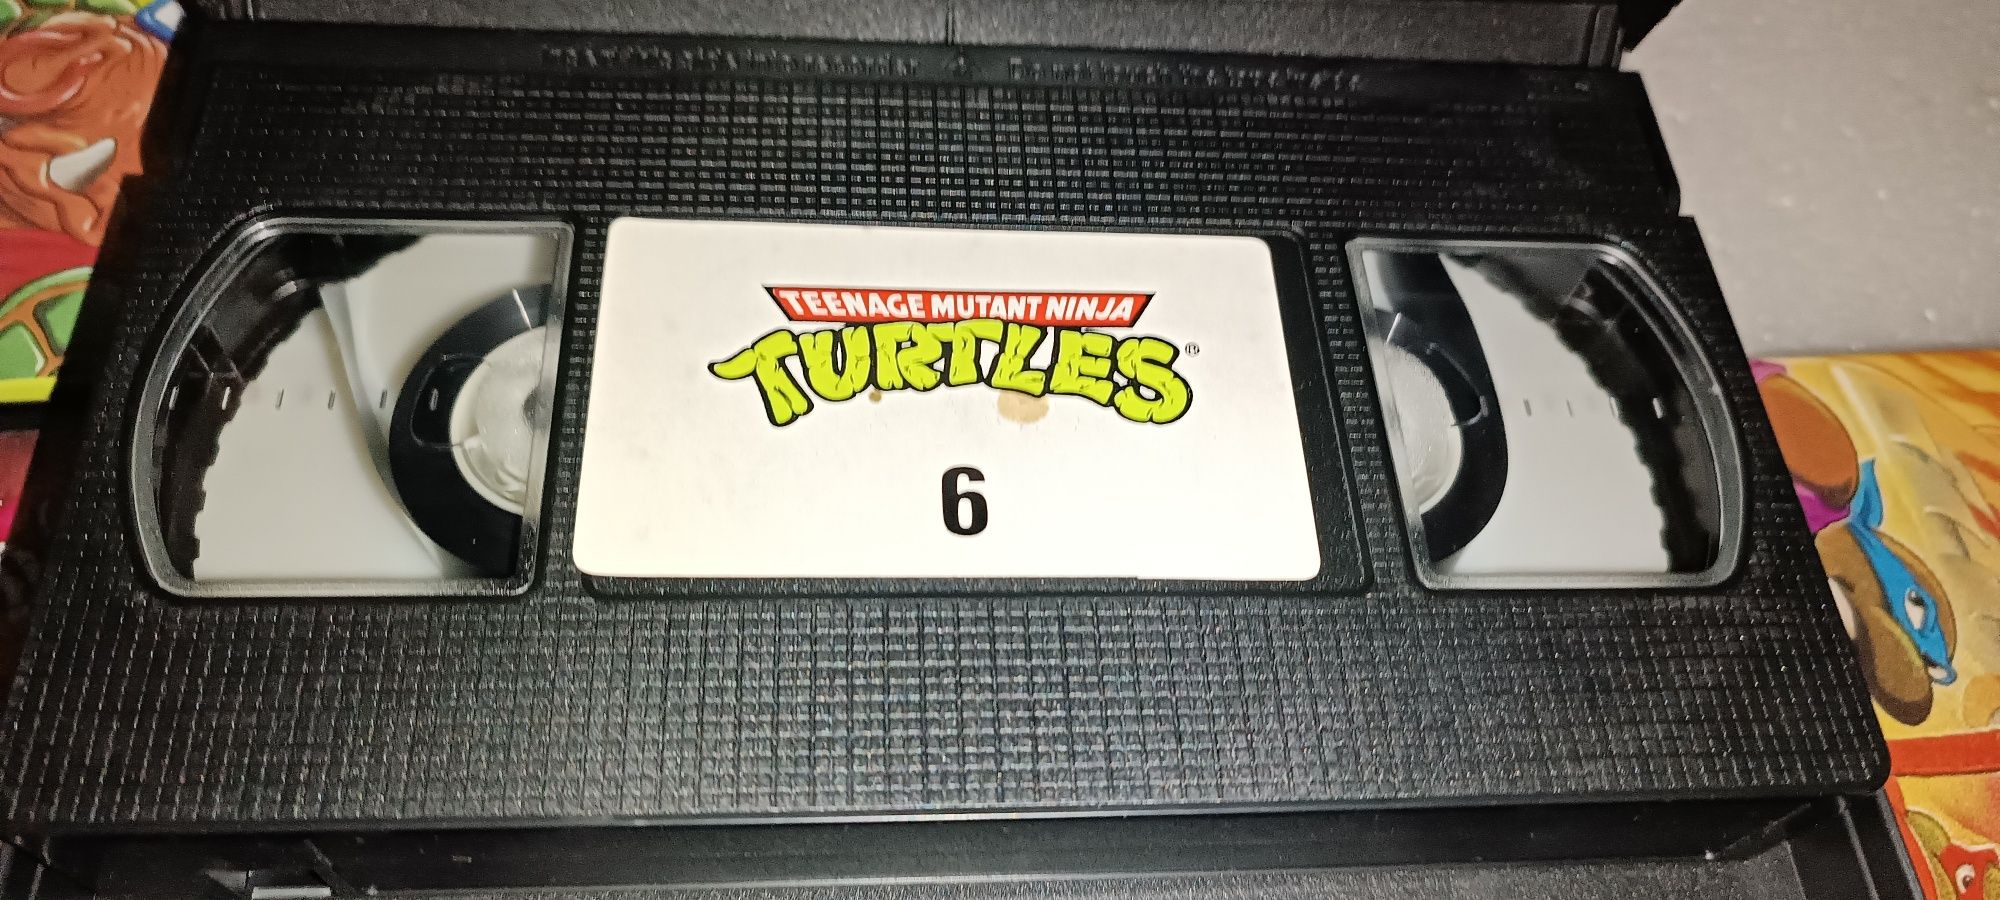 4 antigas cassetes VHS tartarugas ninja todas 10 euros